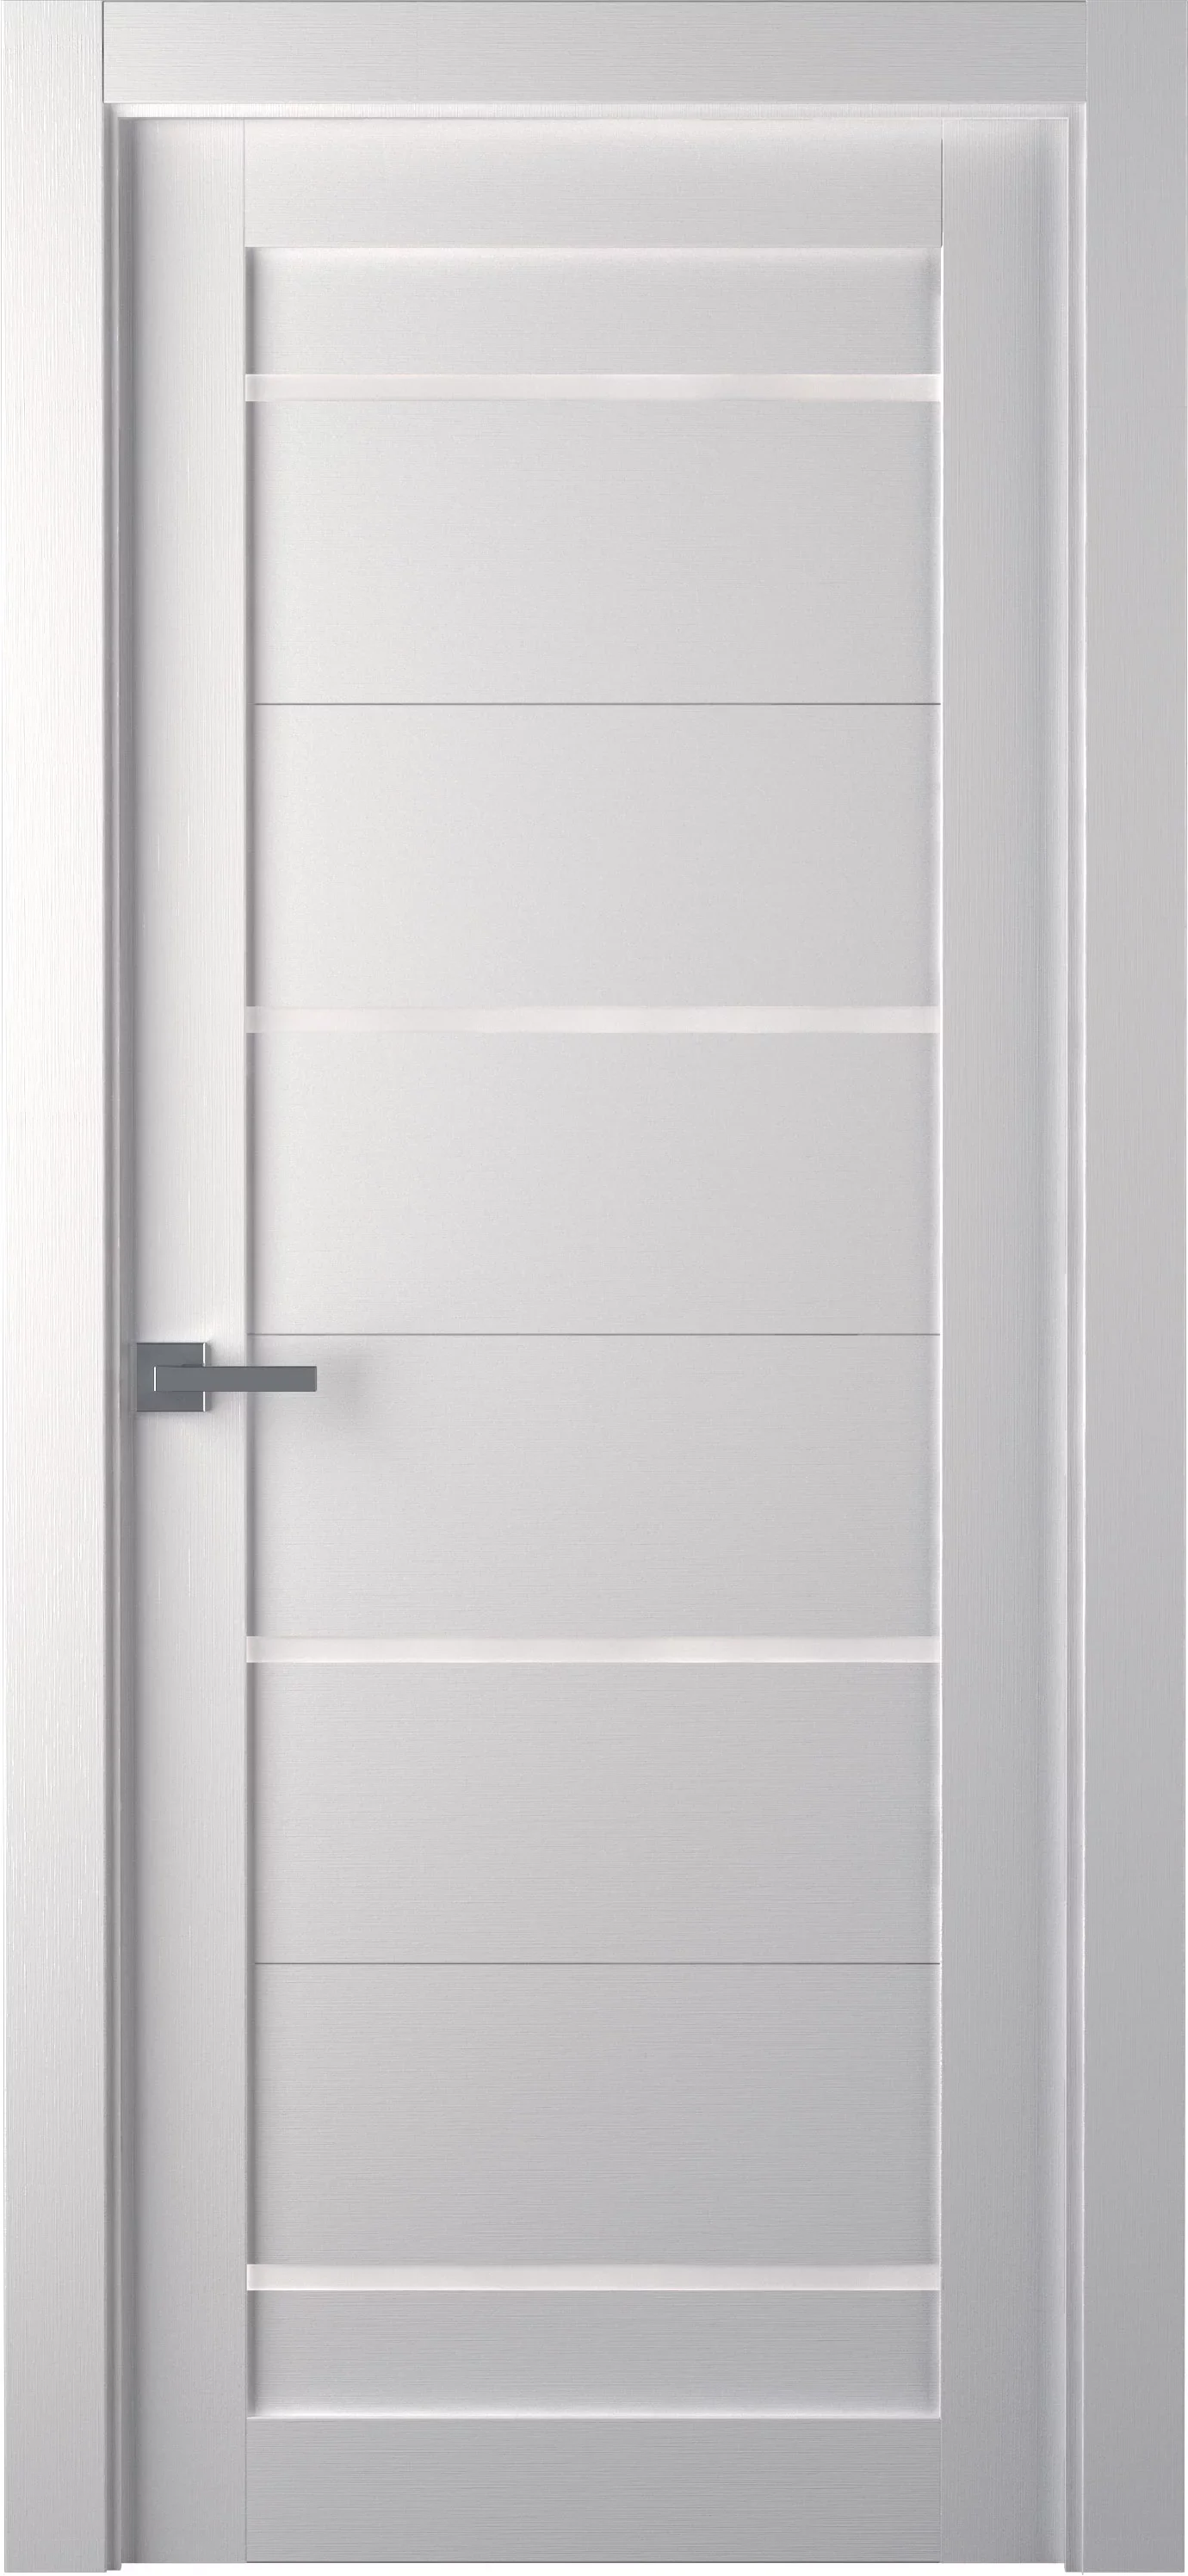 Durų apvadas baltos tekstūrinės spalvos, 1 vnt, 7 x 1.5 x 220 cm, storis 6 mm - 2